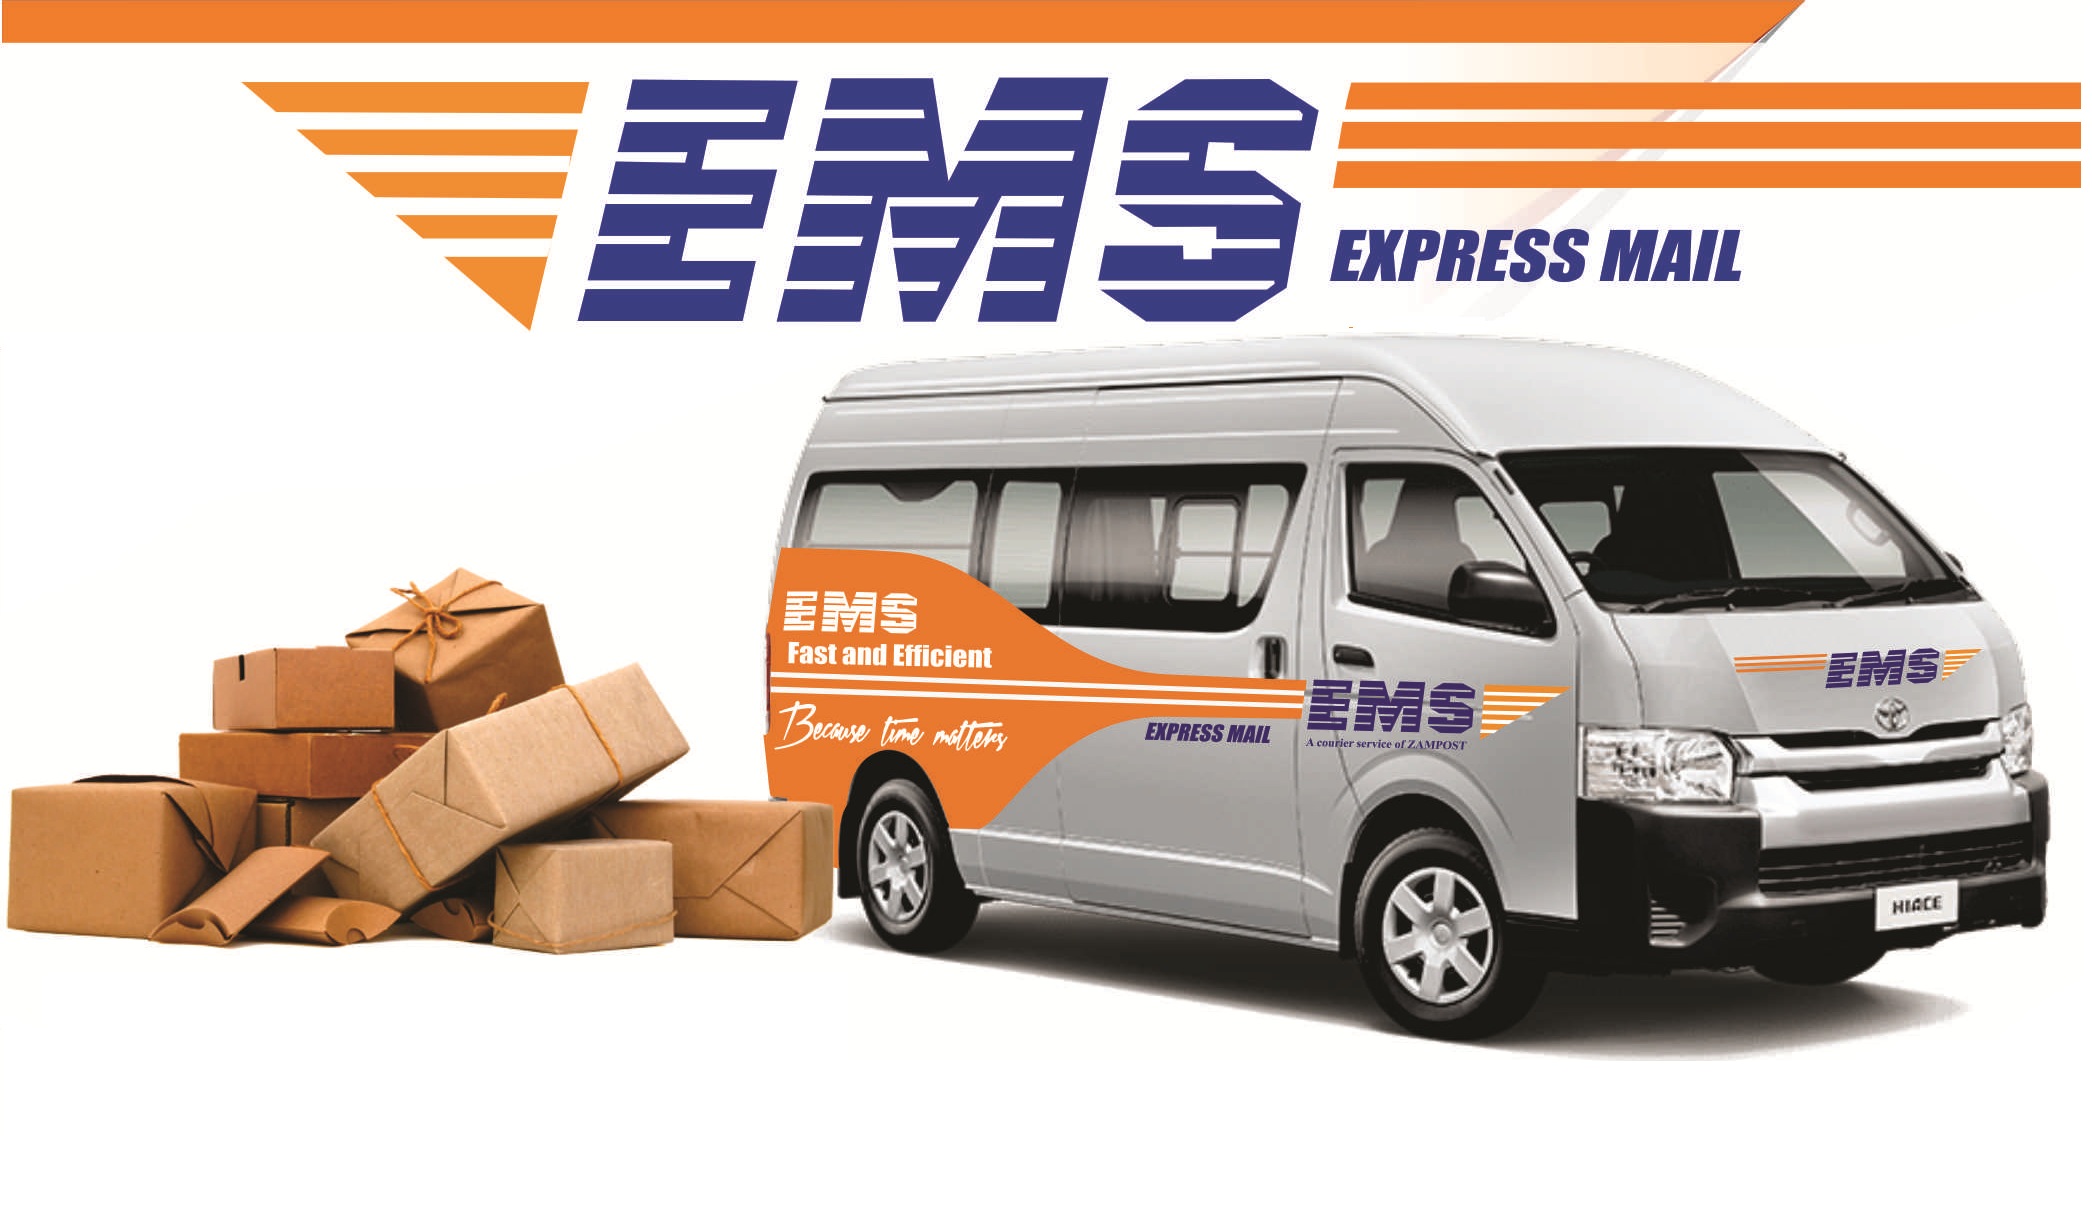 Ems track. Ems Express. Экспресс почта ЕМС. Ems Express mail service. Ems Express mail service из Кореи.